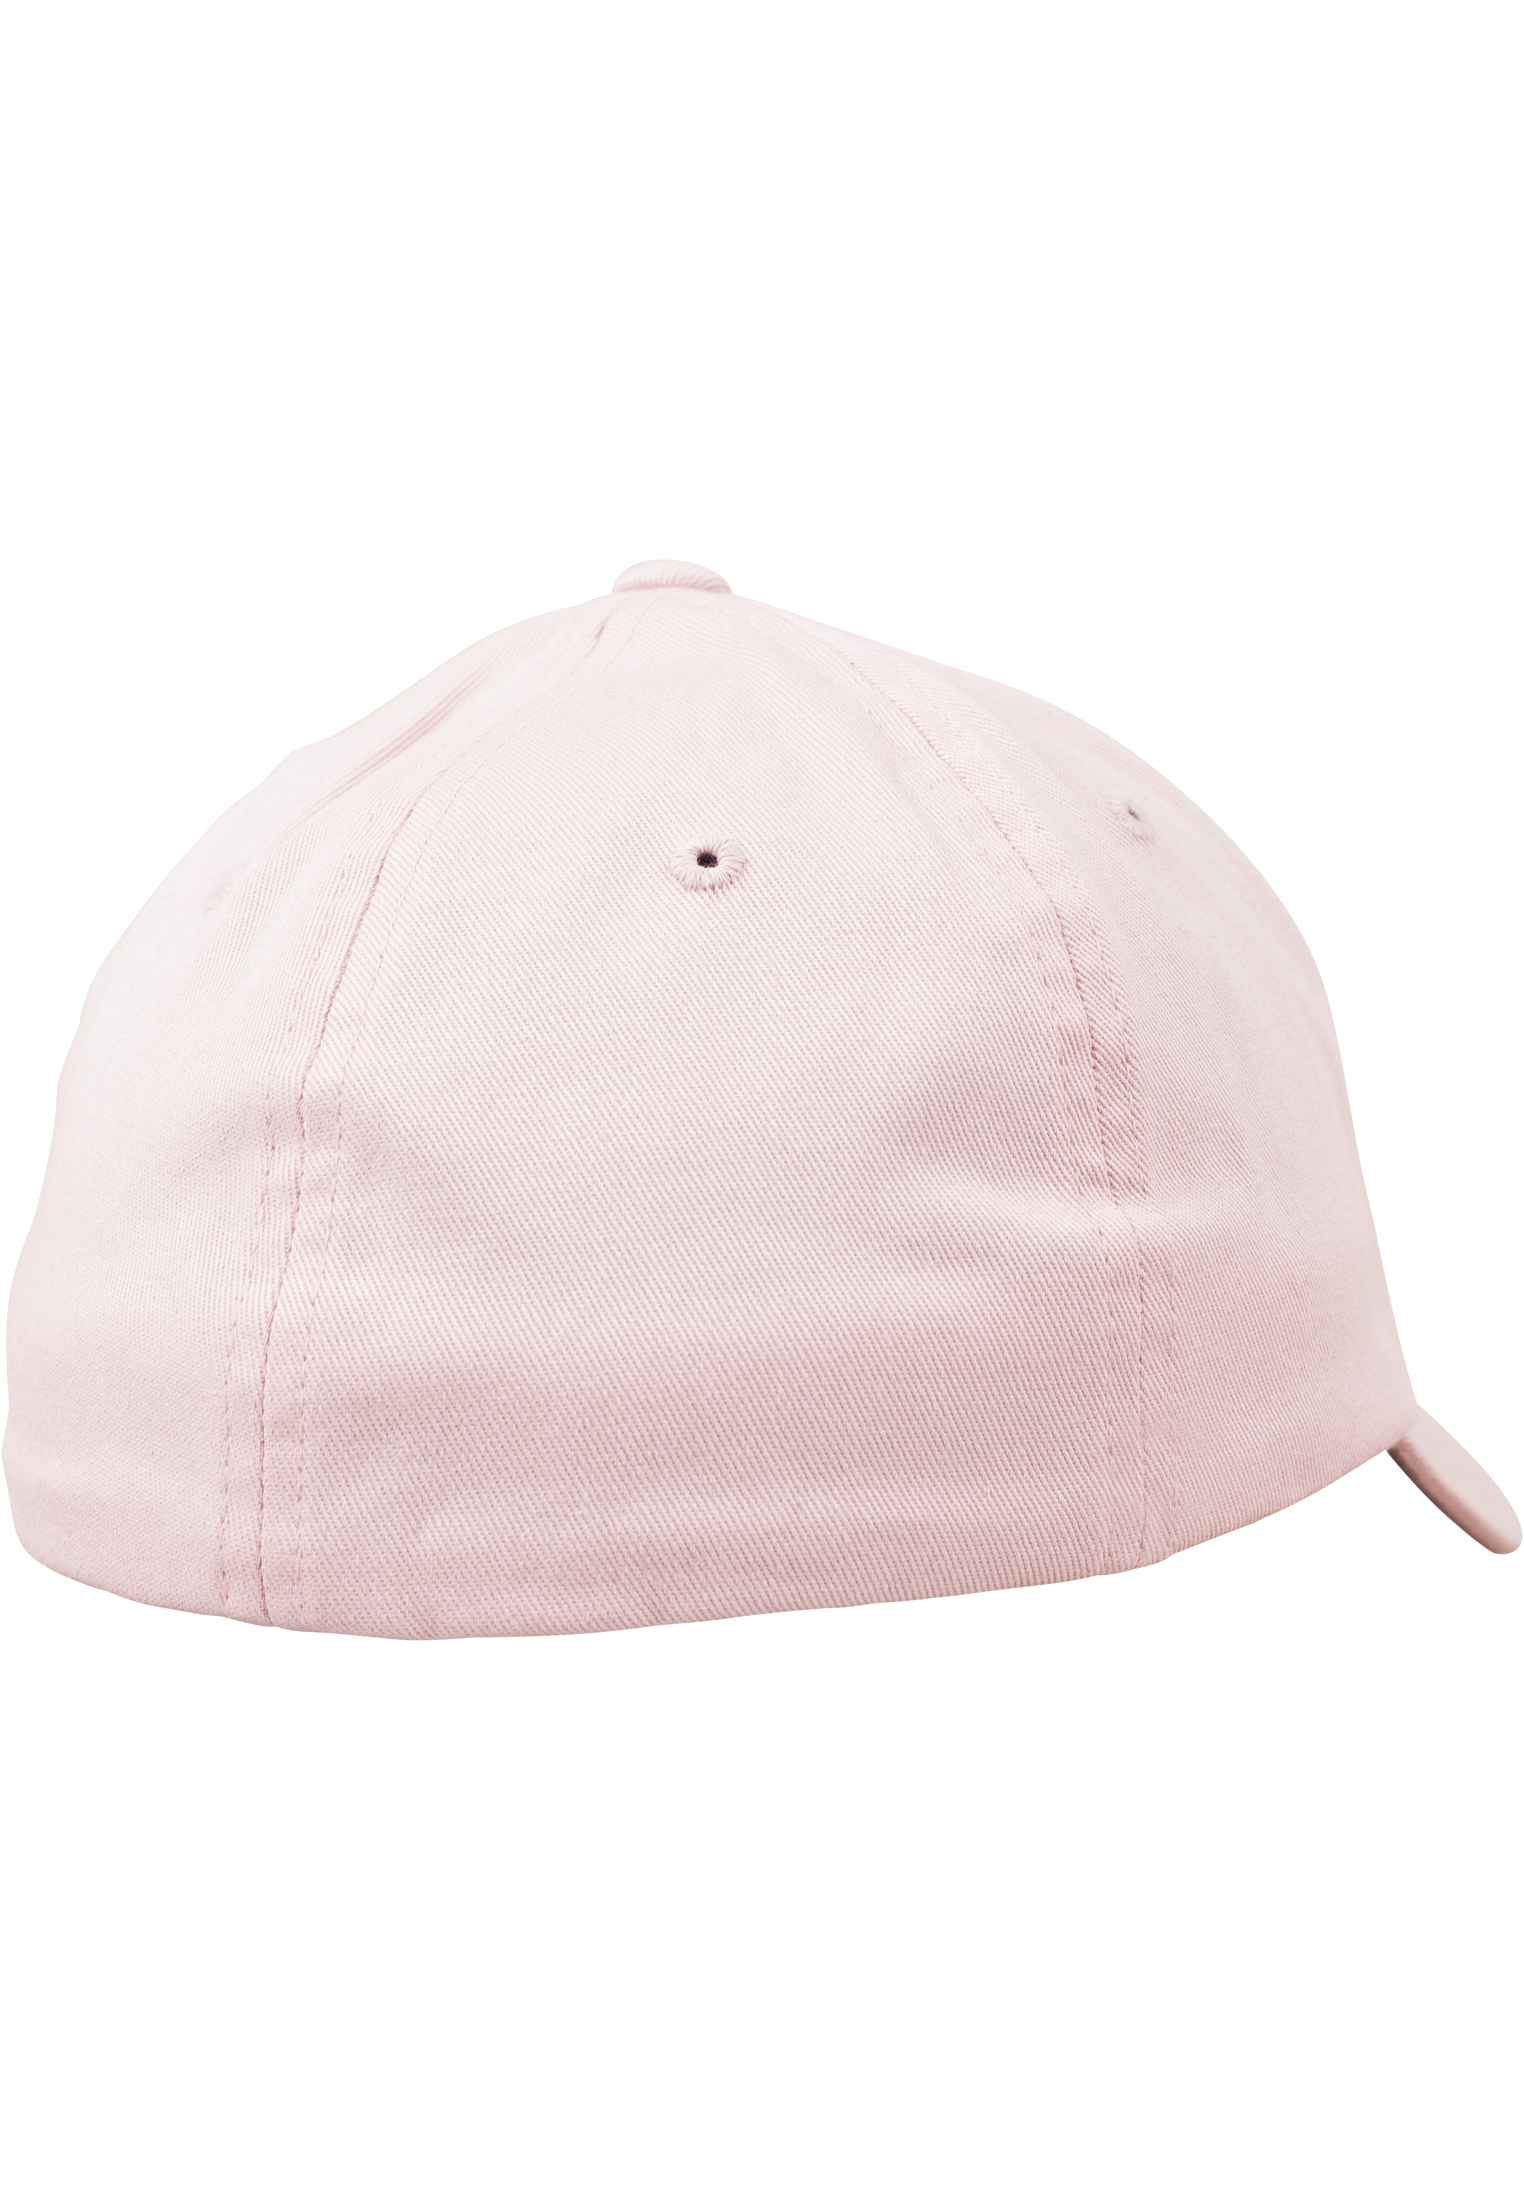 Dad Caps Flexfit Cotton Twill Dad Cap in Farbe pink